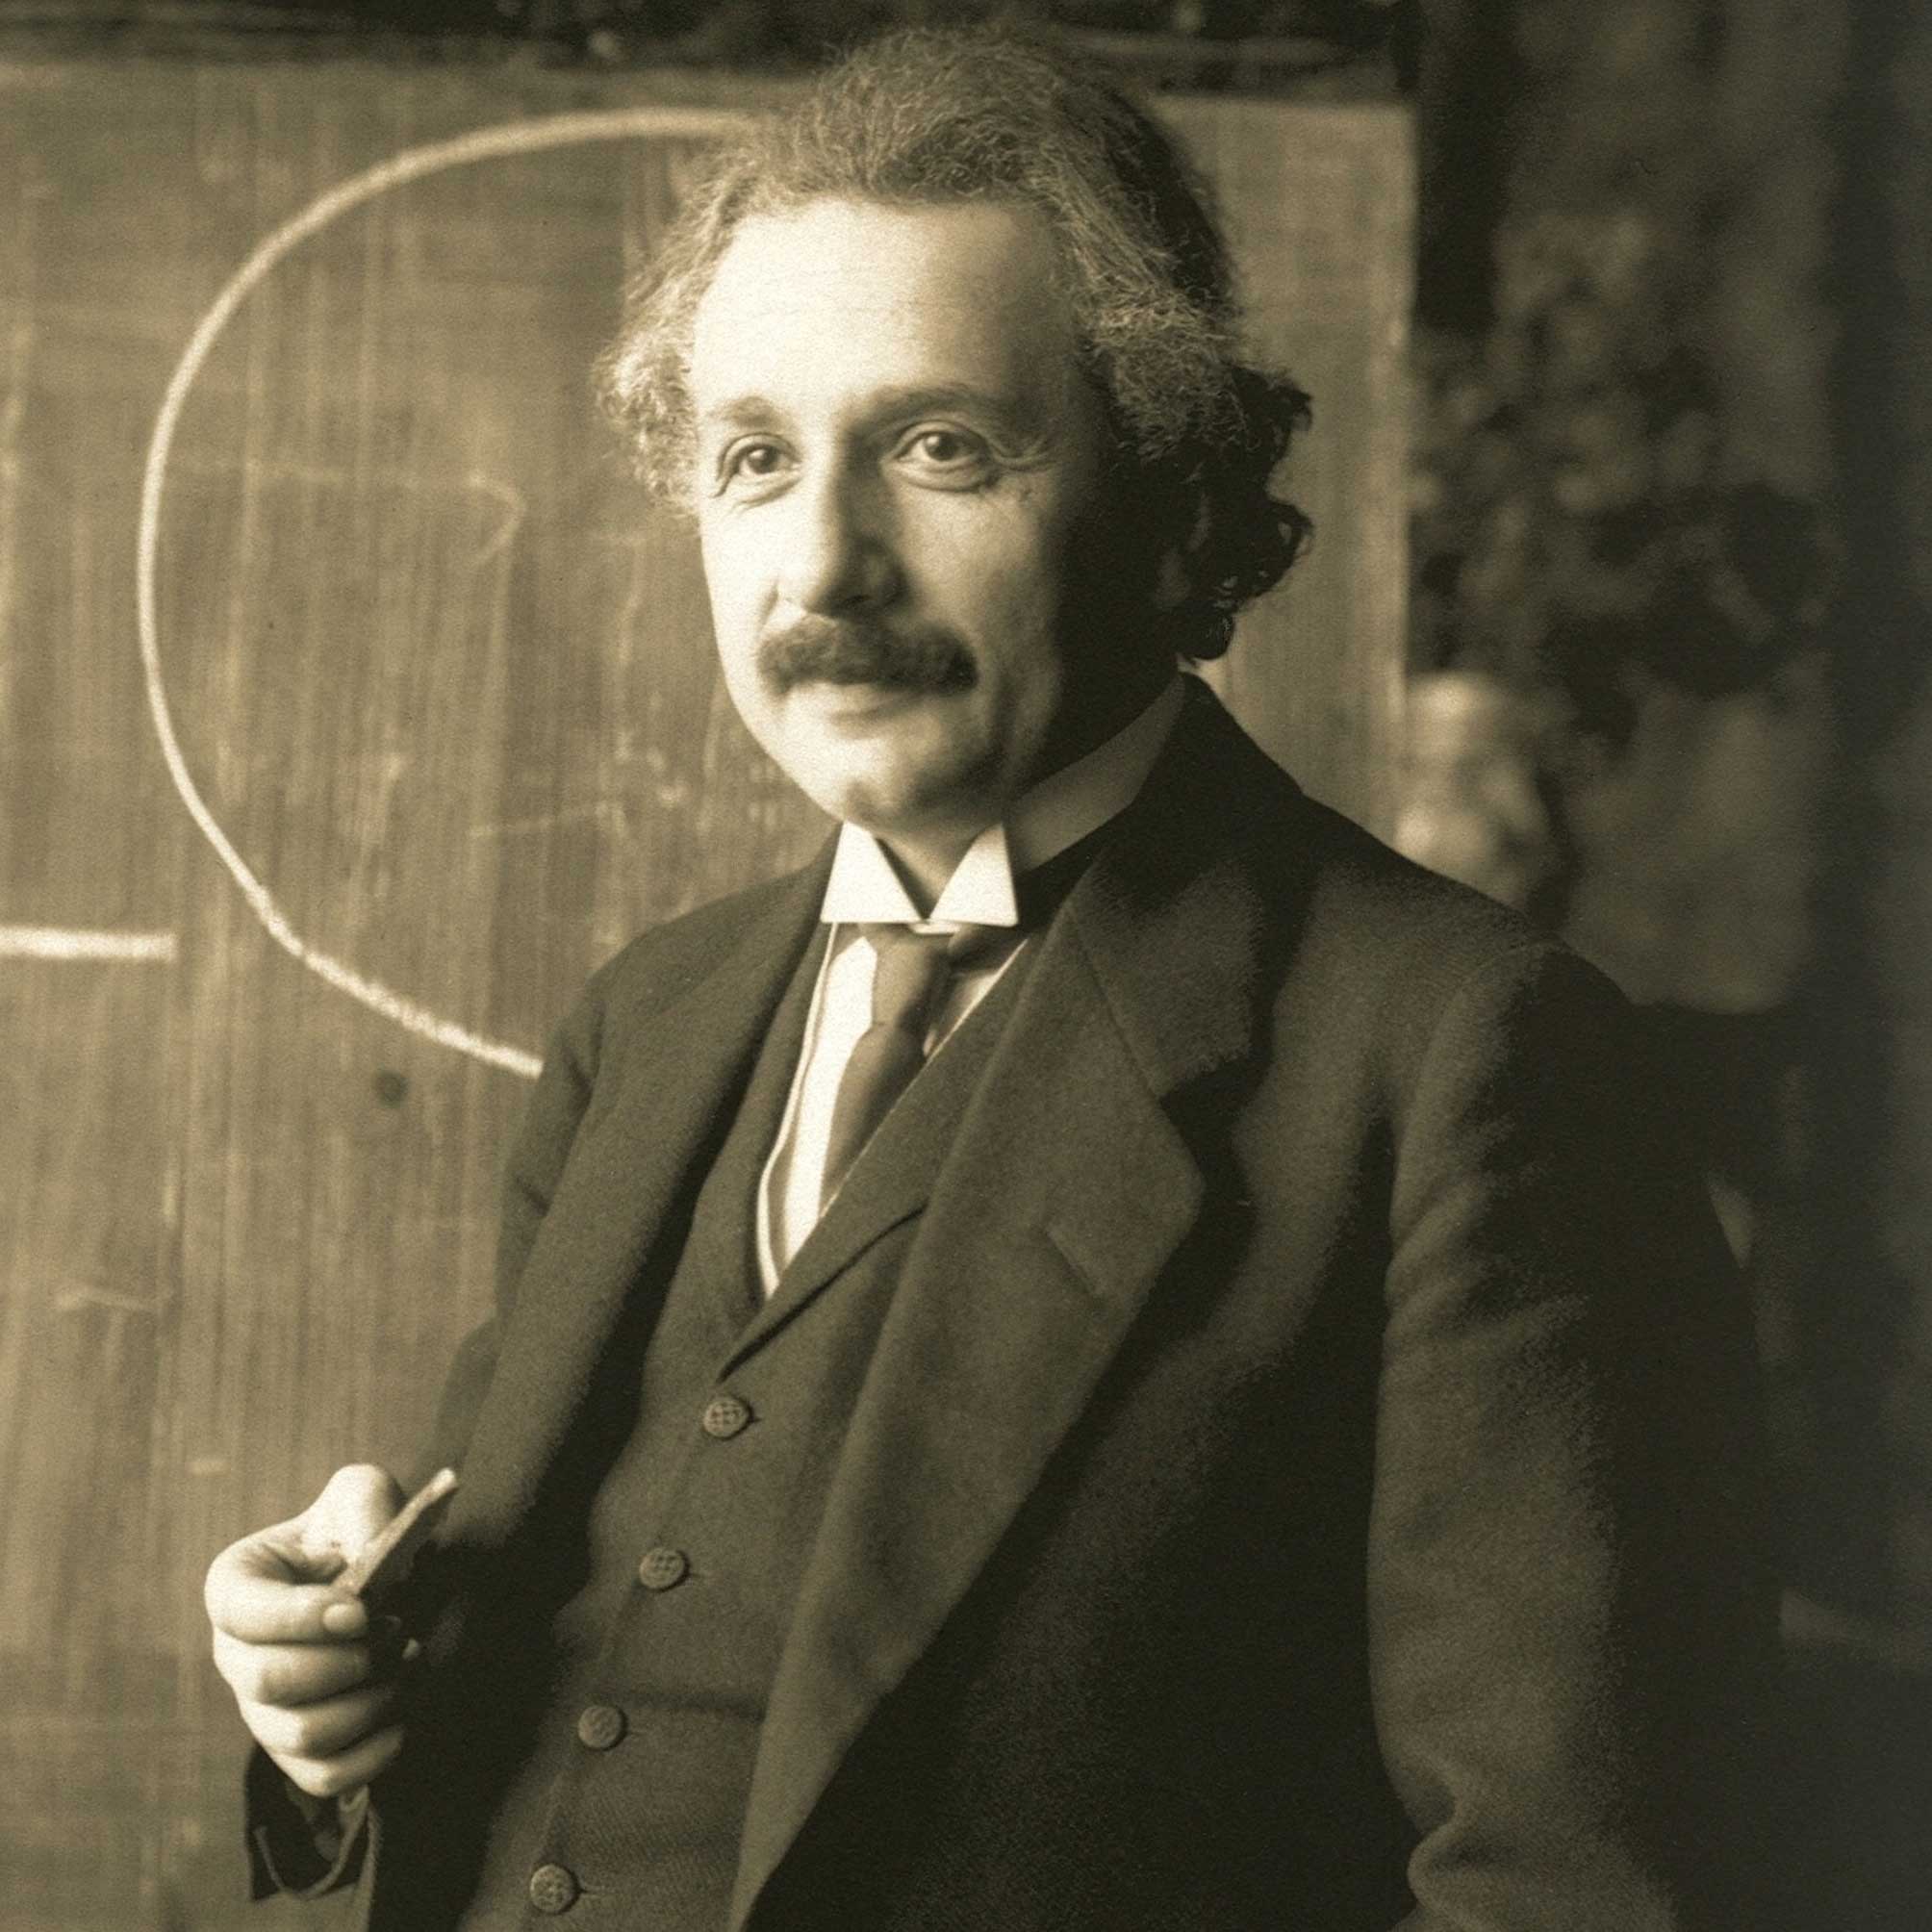 In 1916 Albert Einstein predicted the existence of gravitational waves